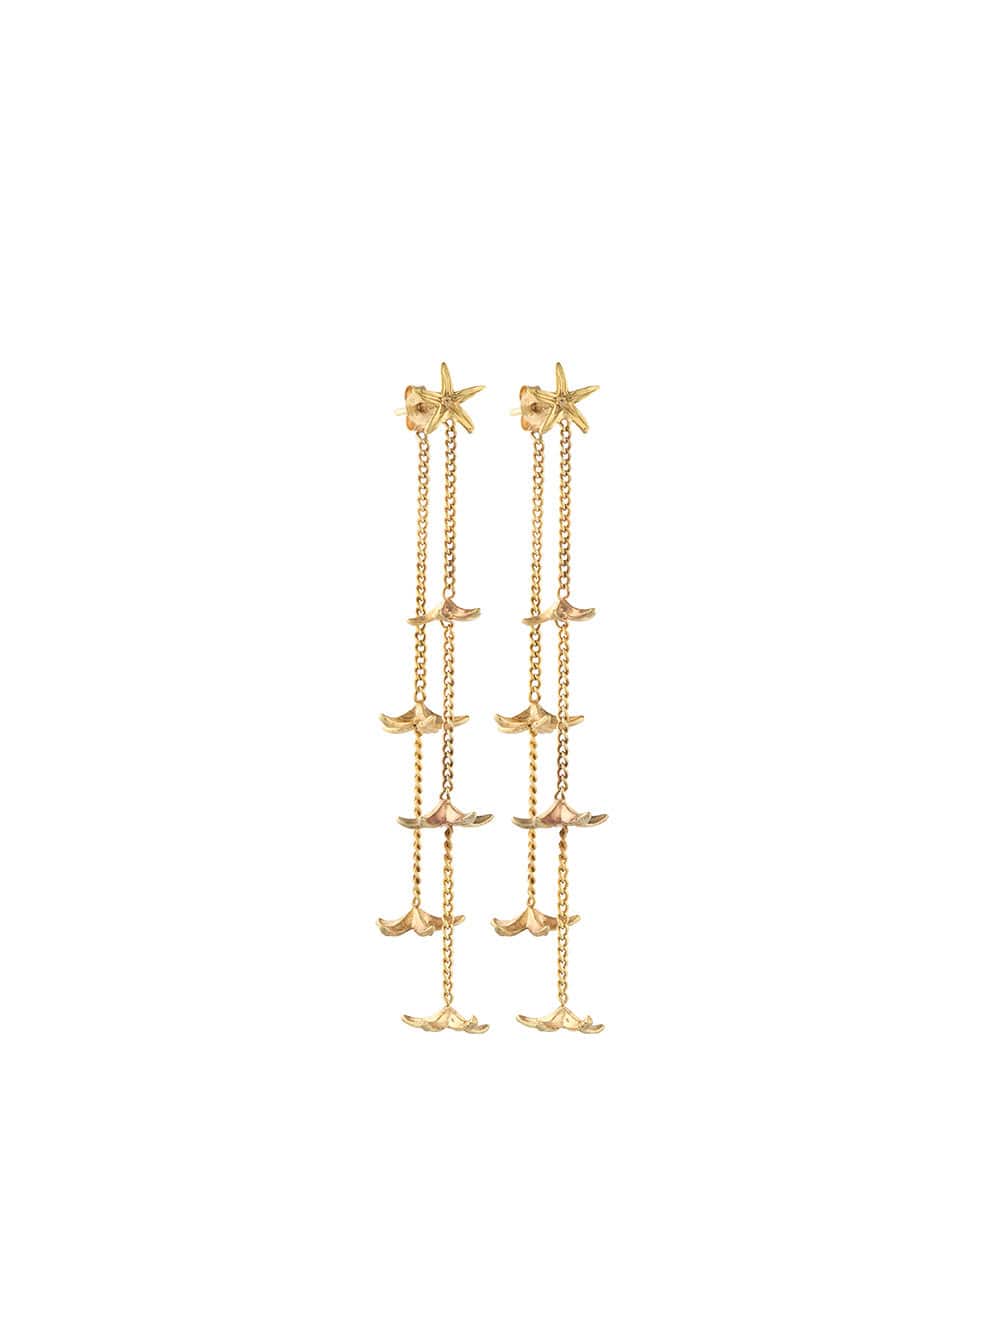 Essence Drop Earring KIVARI | Gold stud earrings with drop chain and flower details